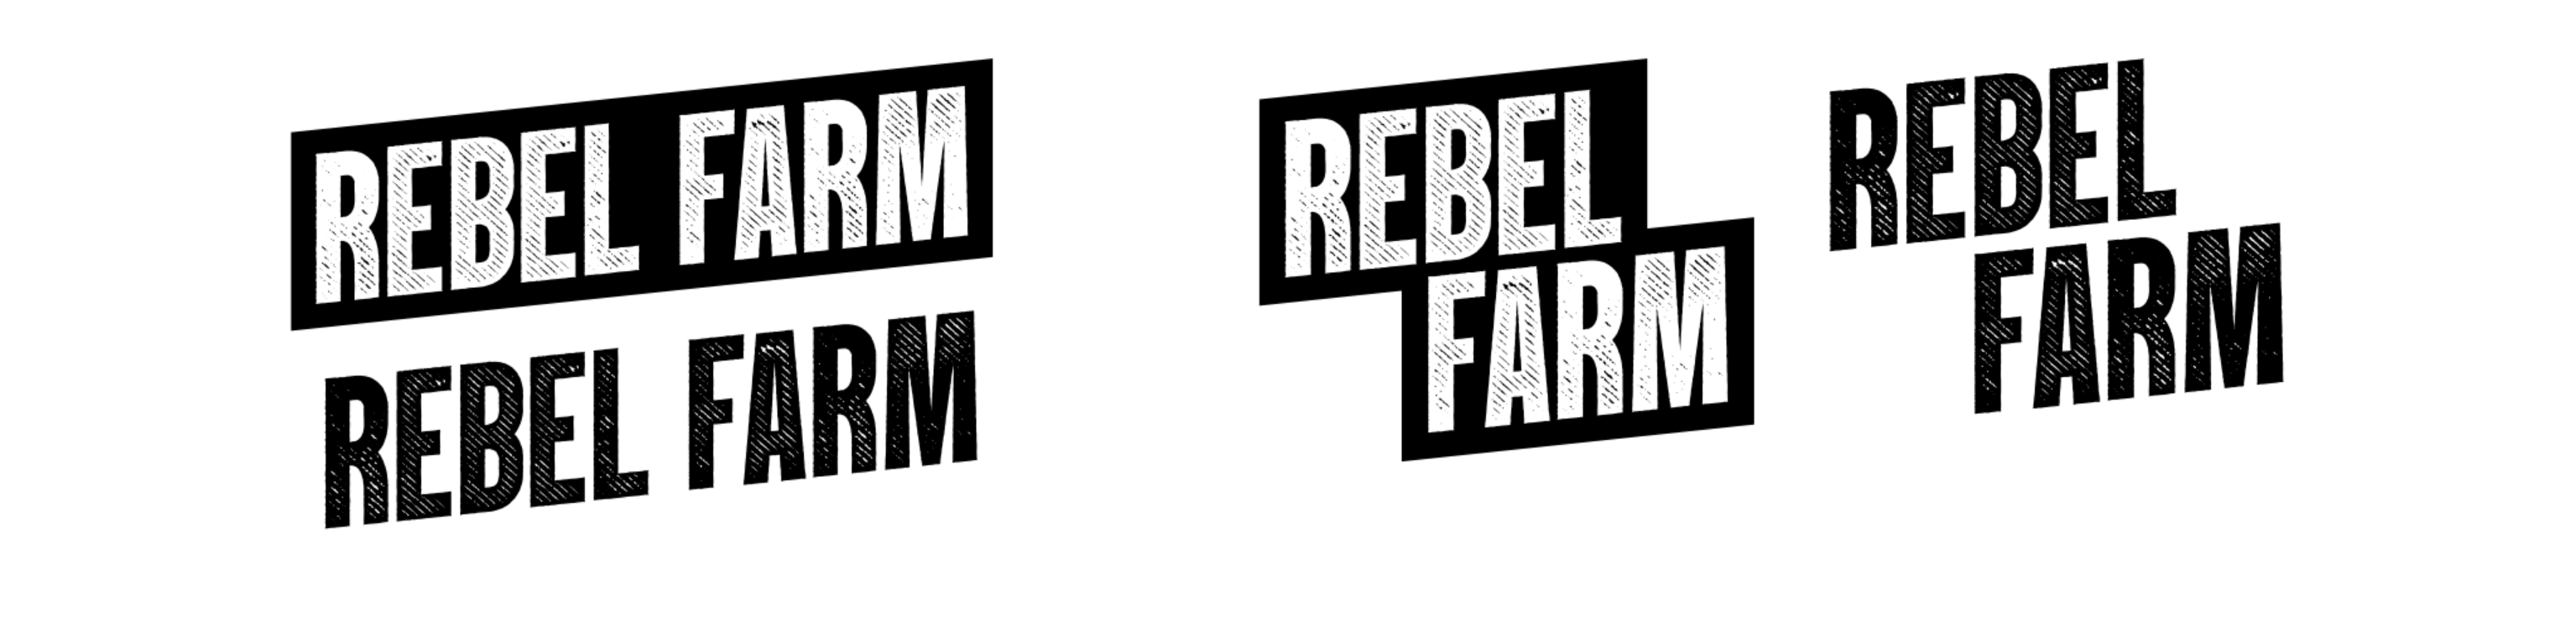 Rebel Farm brand and logo designed by Alexa B. Taylor